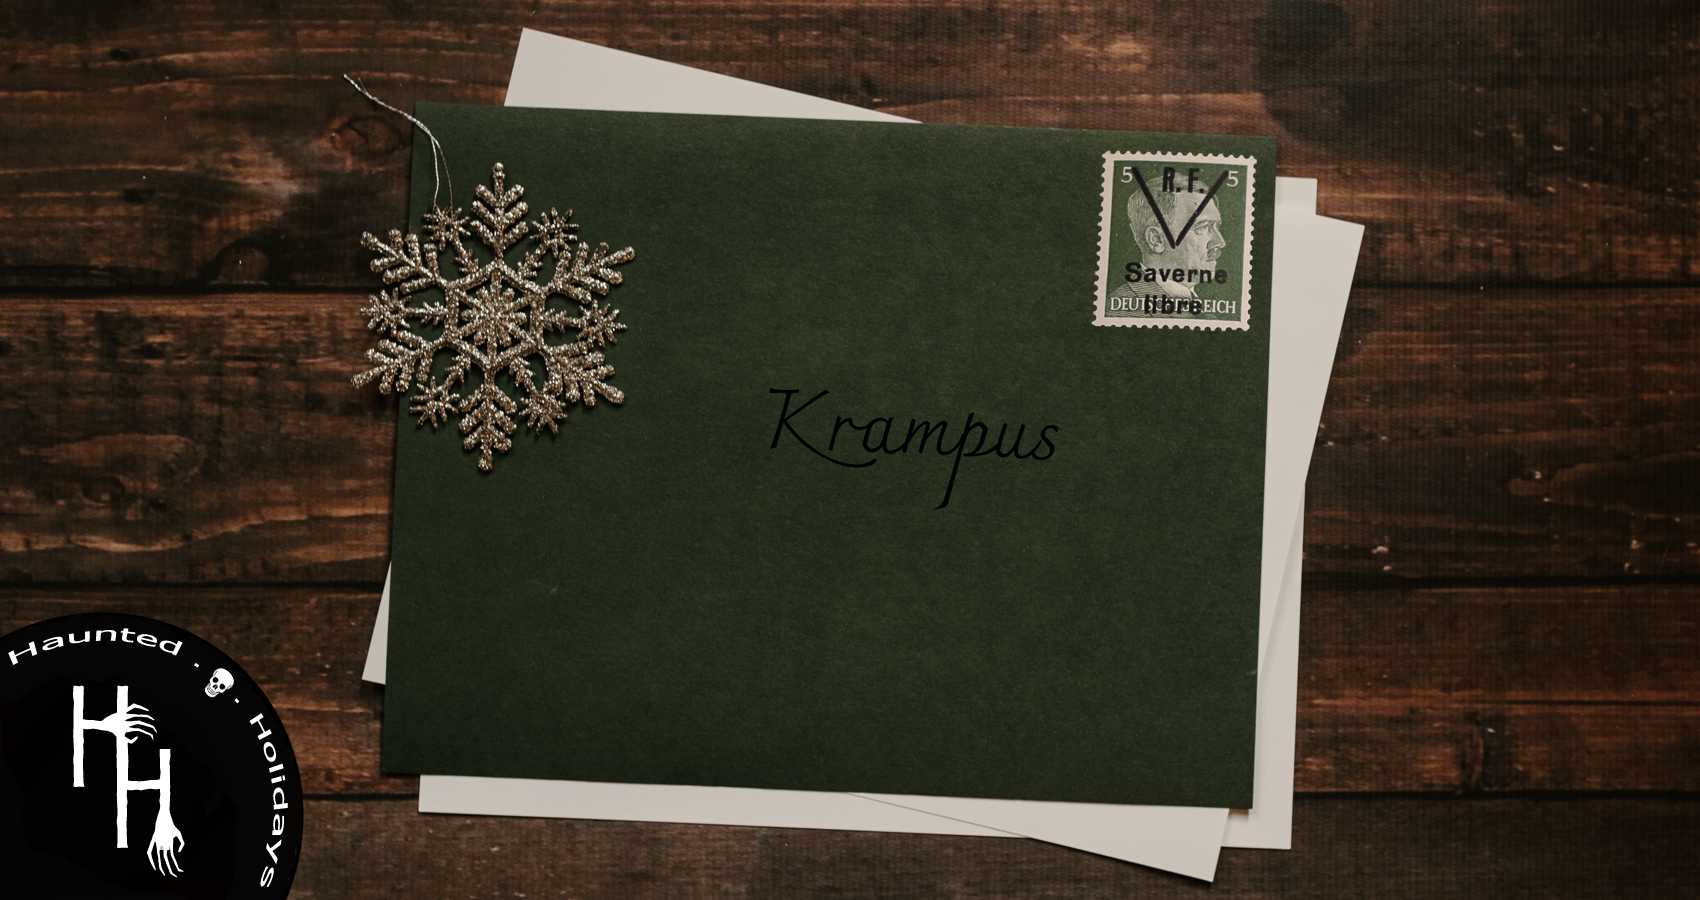 Dead-Letter to Krampus, story by Bernardo Villela at Spillwords.com